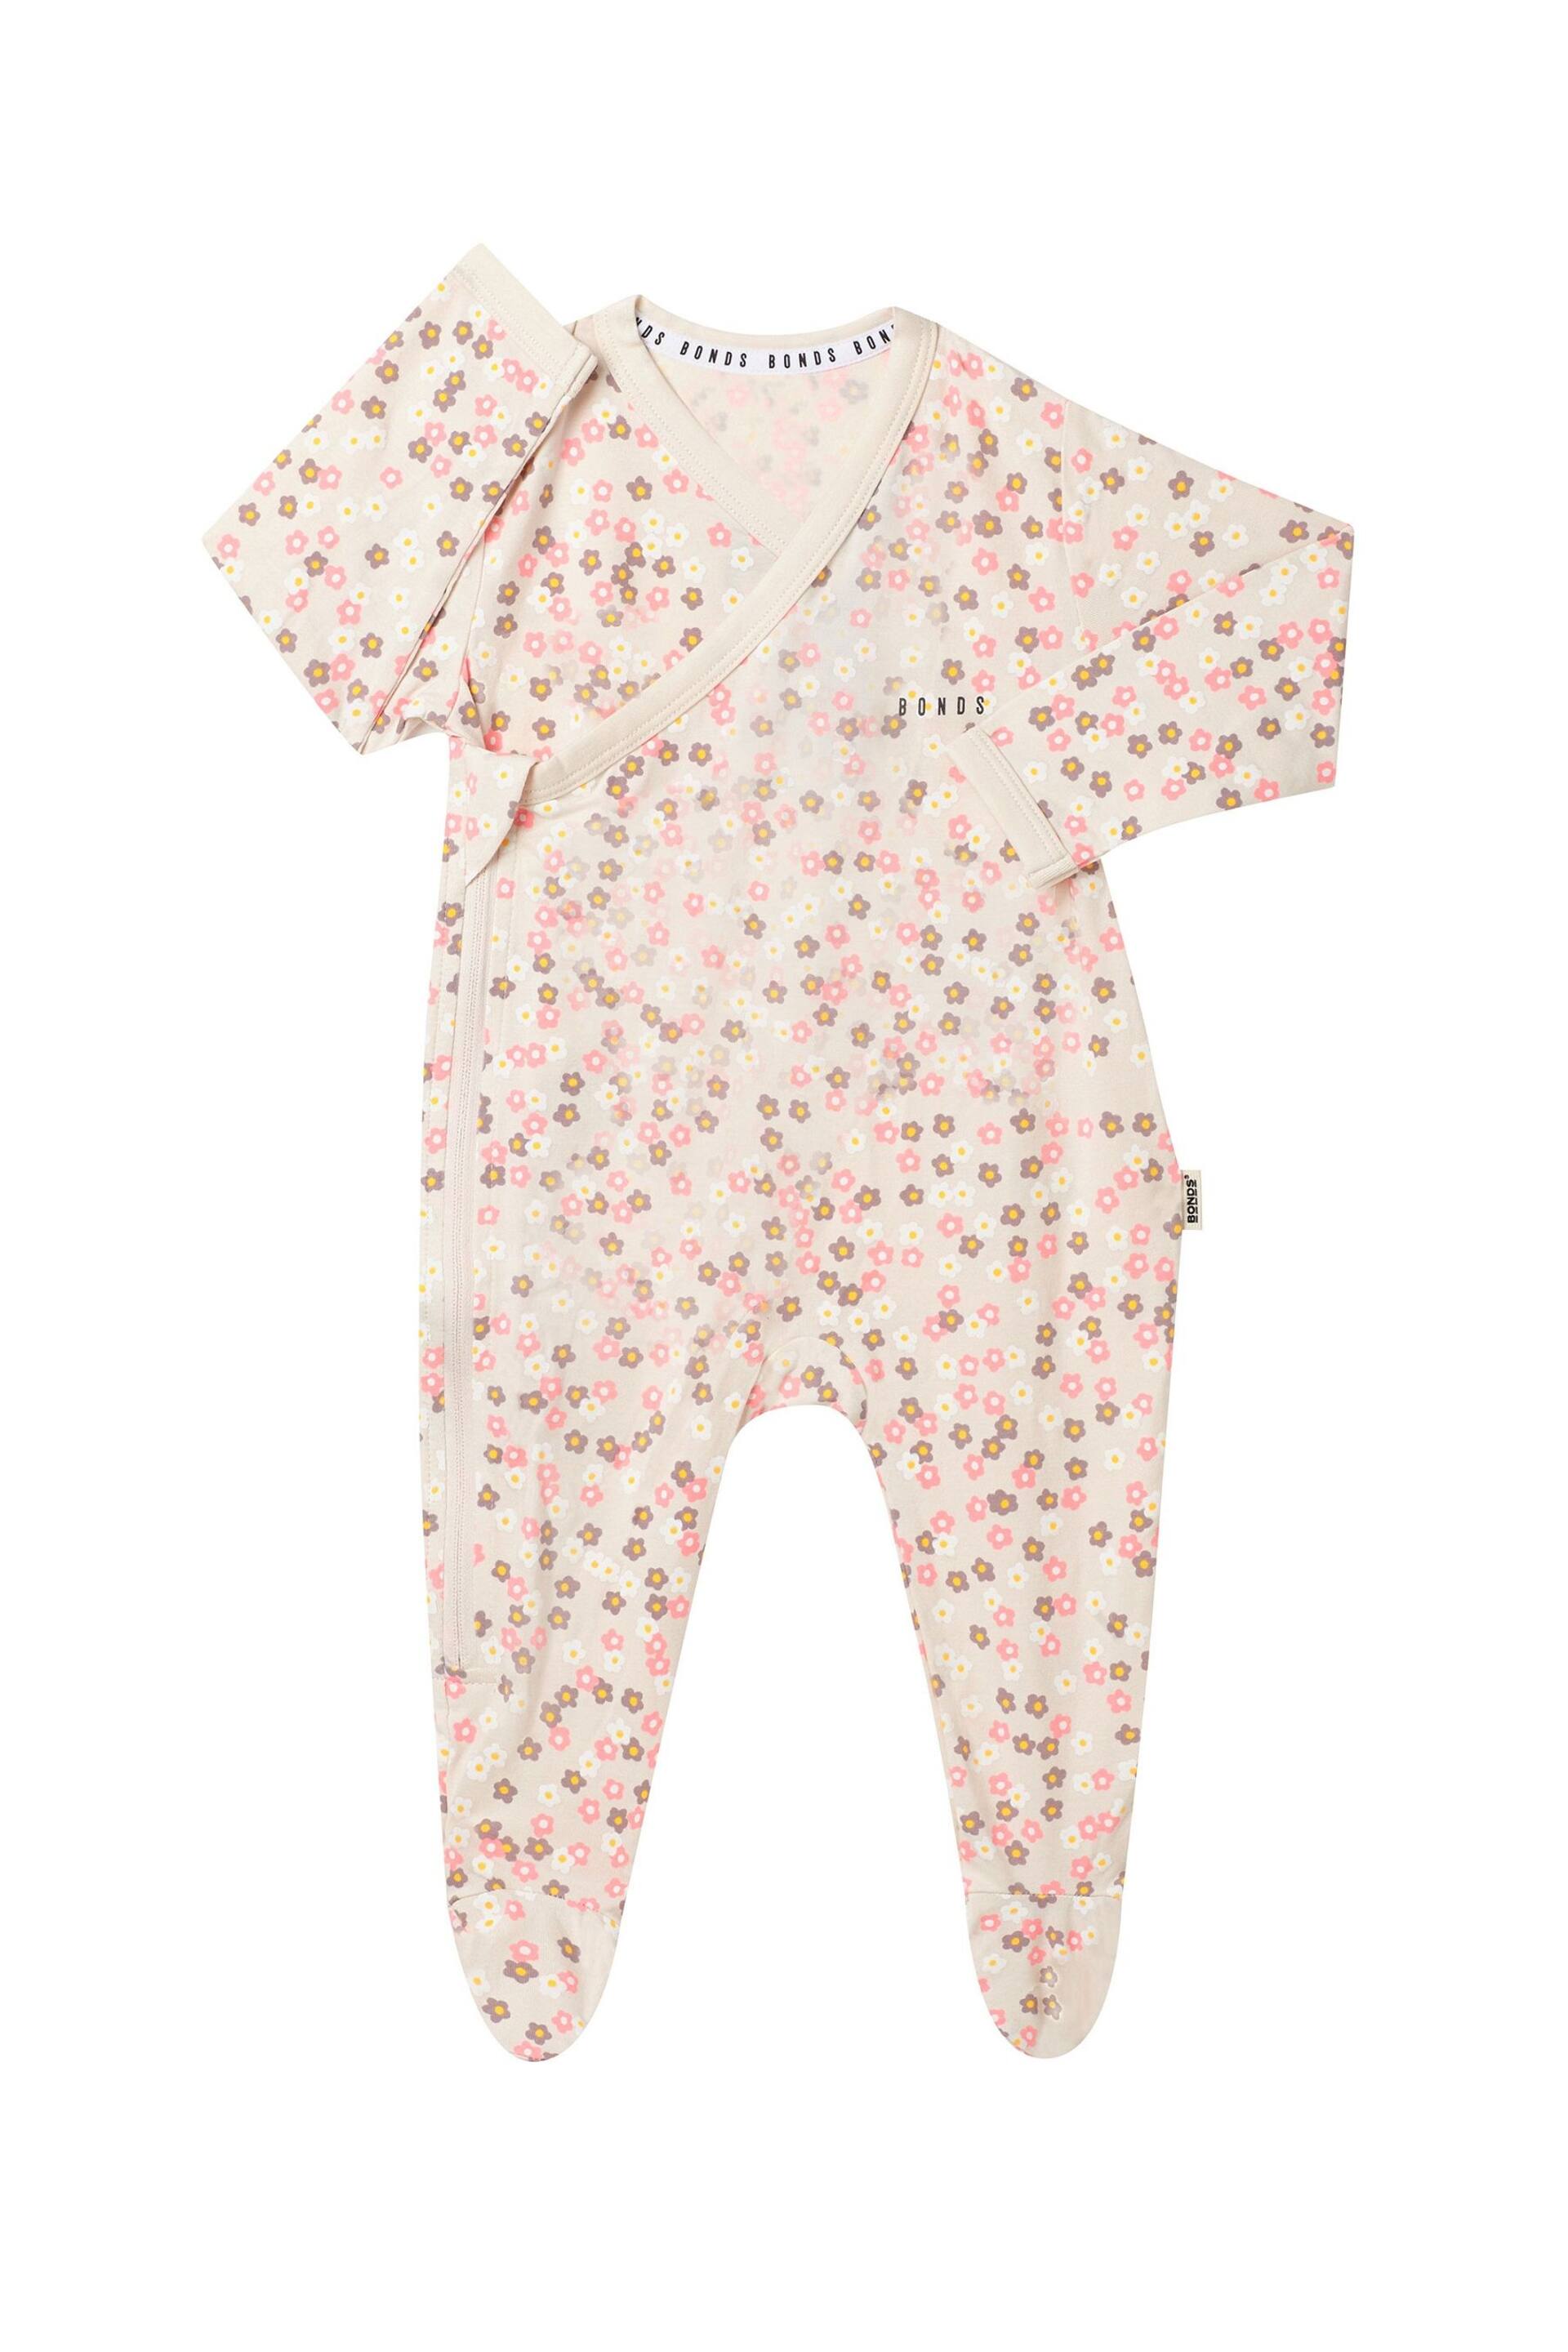 Bonds Pink Floral Print Wrap Zip Sleepsuit - Image 3 of 4